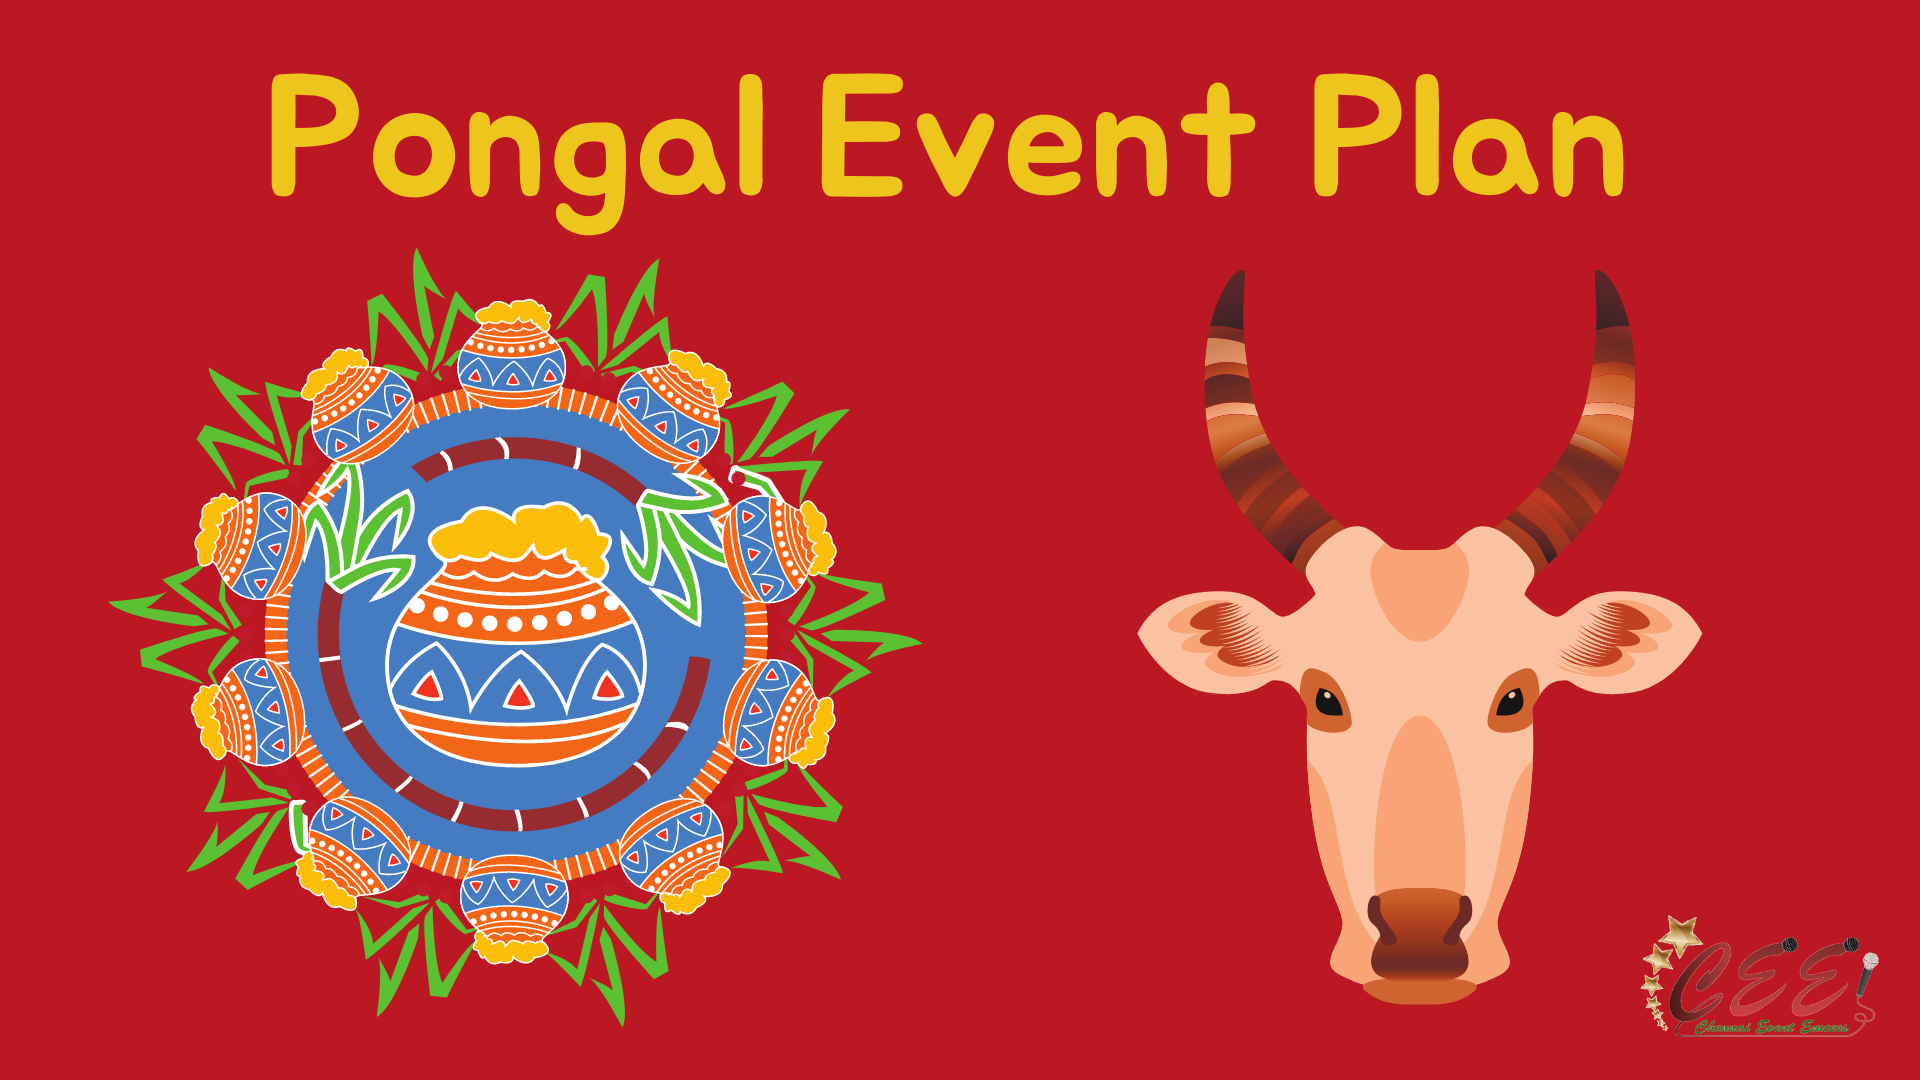 Event Plan for Pongal Event by Chennai Male Emcee Thamizharasan Karunakaran